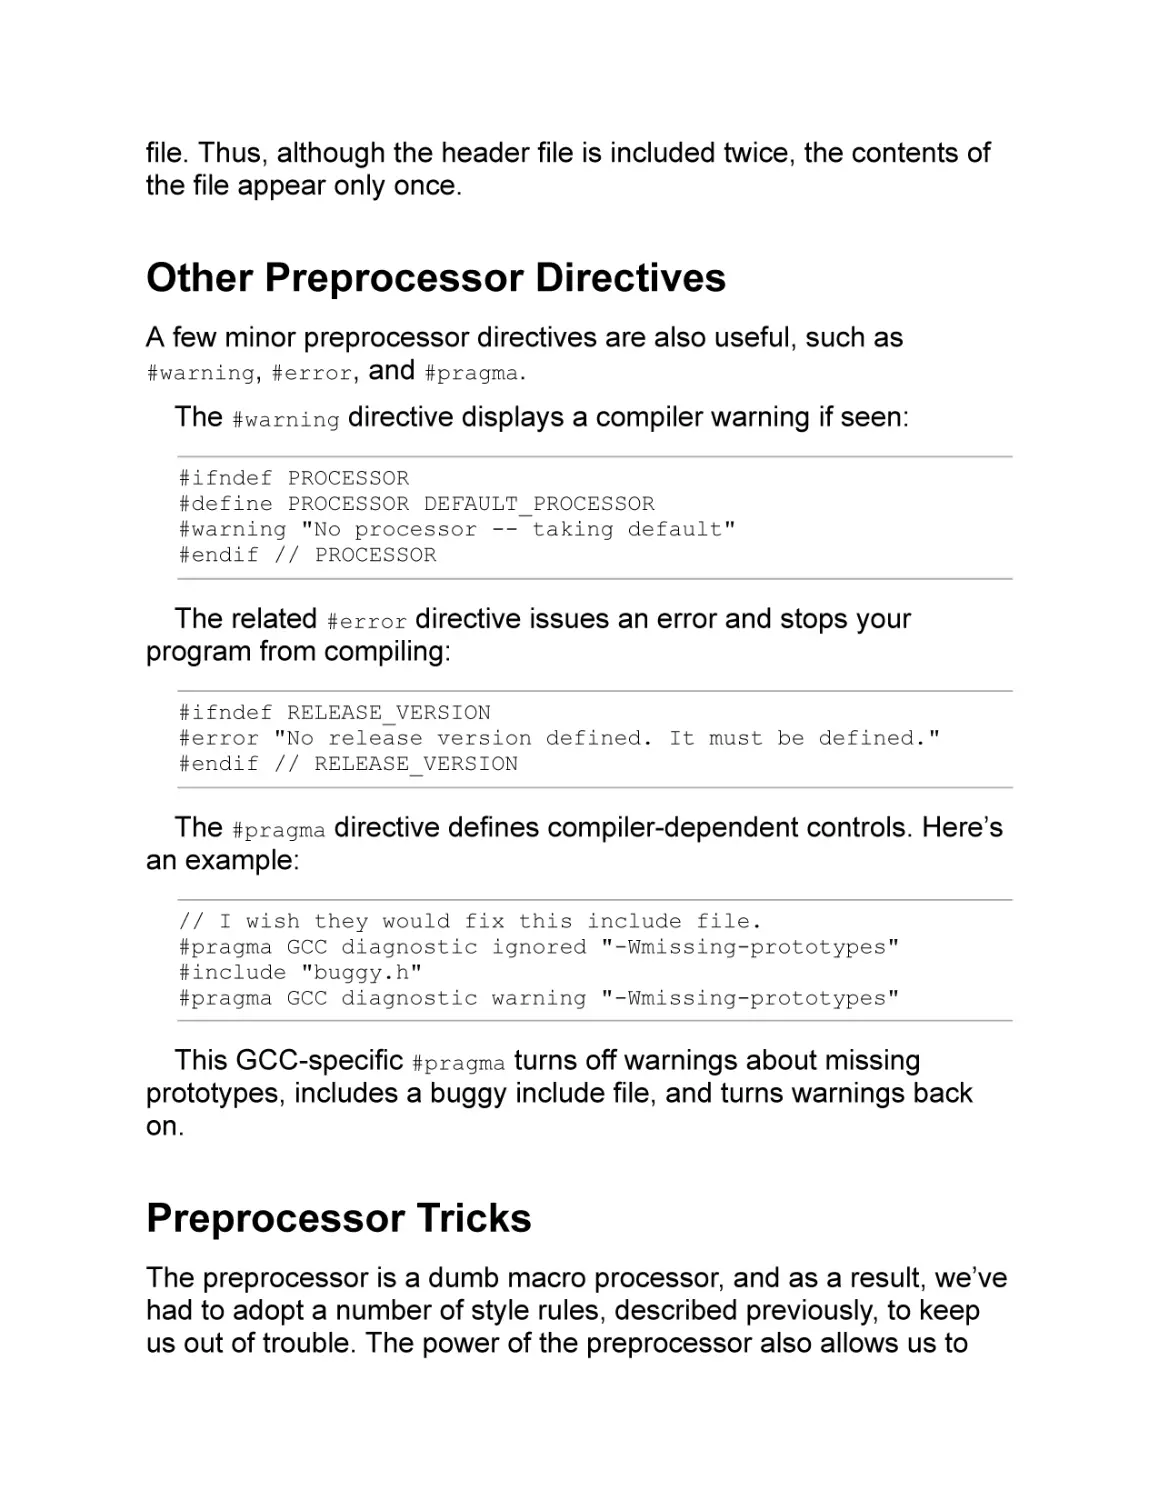 Other Preprocessor Directives
Preprocessor Tricks